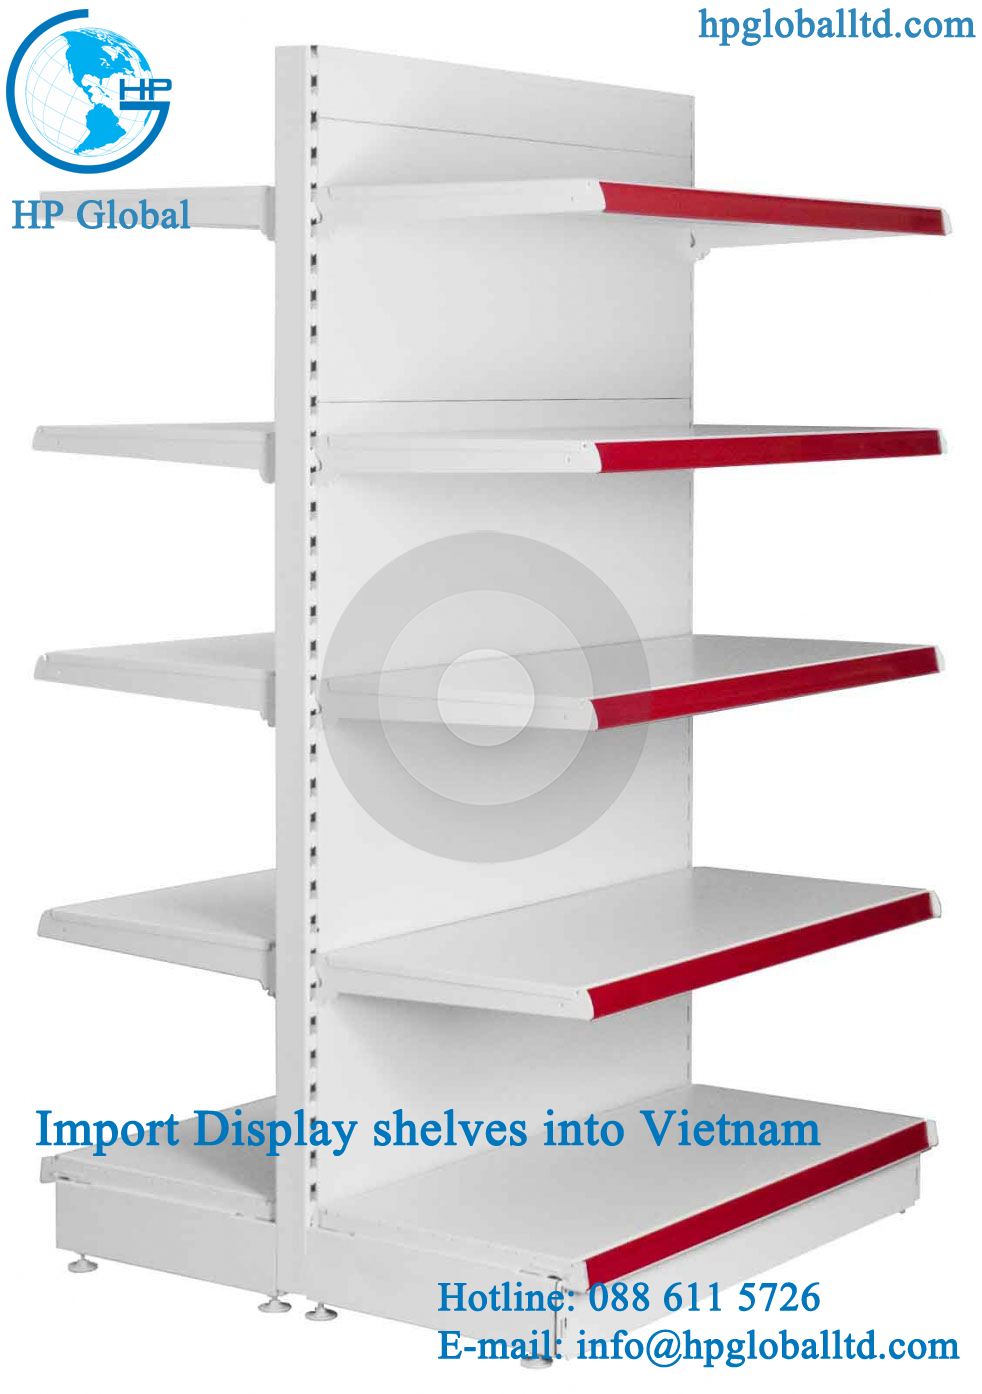 Import Display shelves into Vietnam